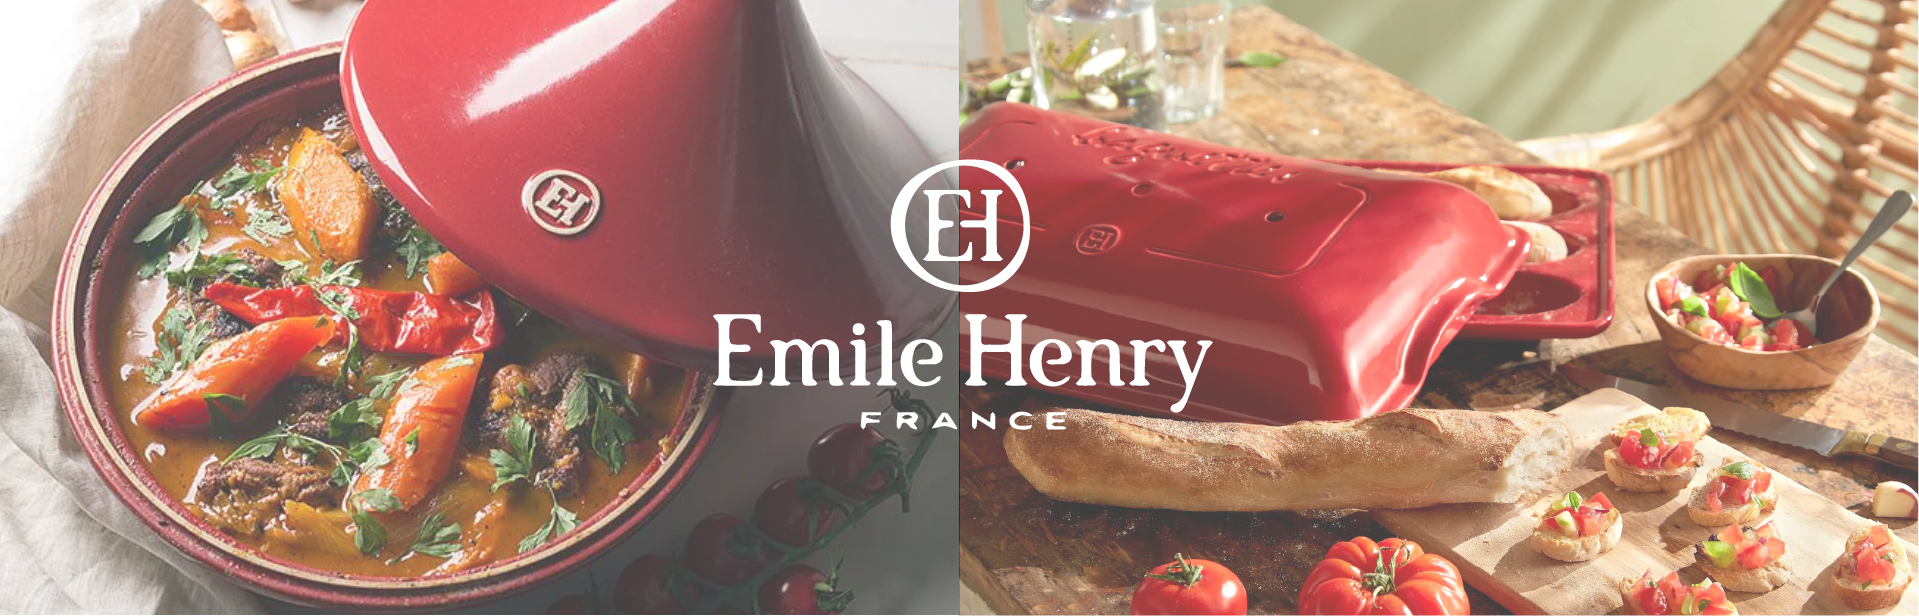 Emile Henry Flame® 4 1/5 qt Round Burgundy Ceramic Dutch Oven - 10